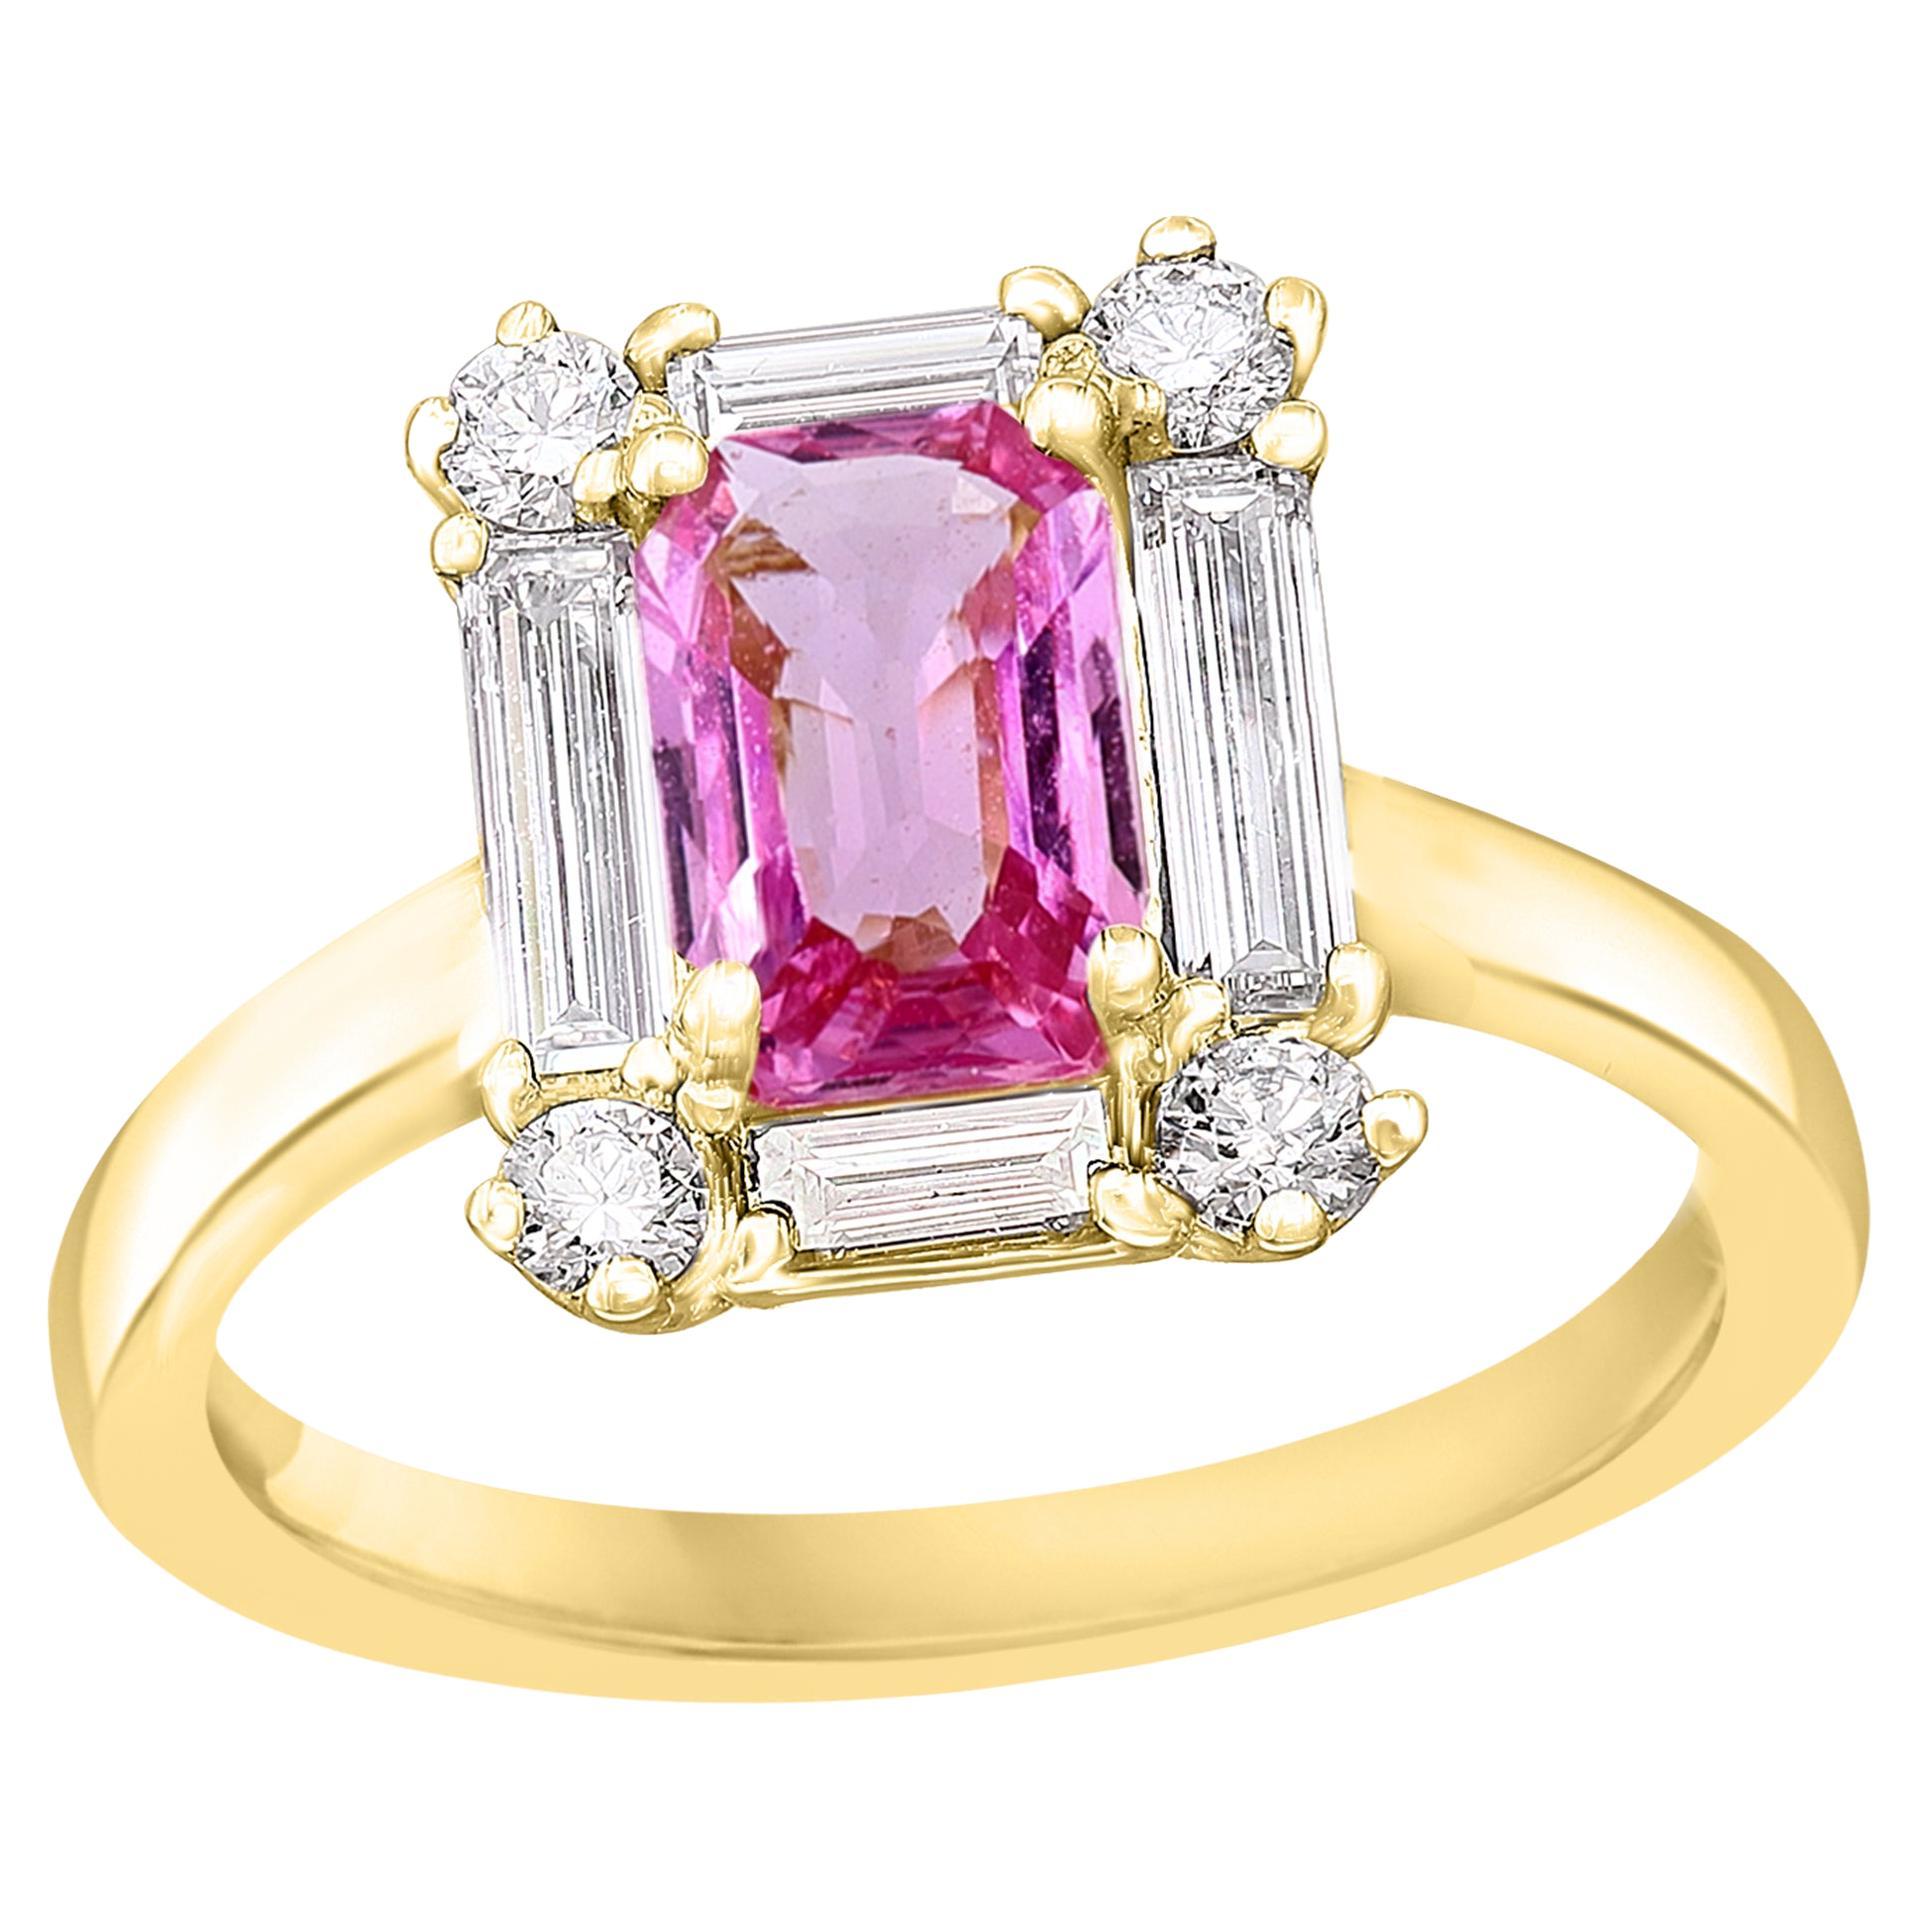 0.55 Carat Emerald Cut Pink Sapphire and Diamond Ring 14K Yellow Gold